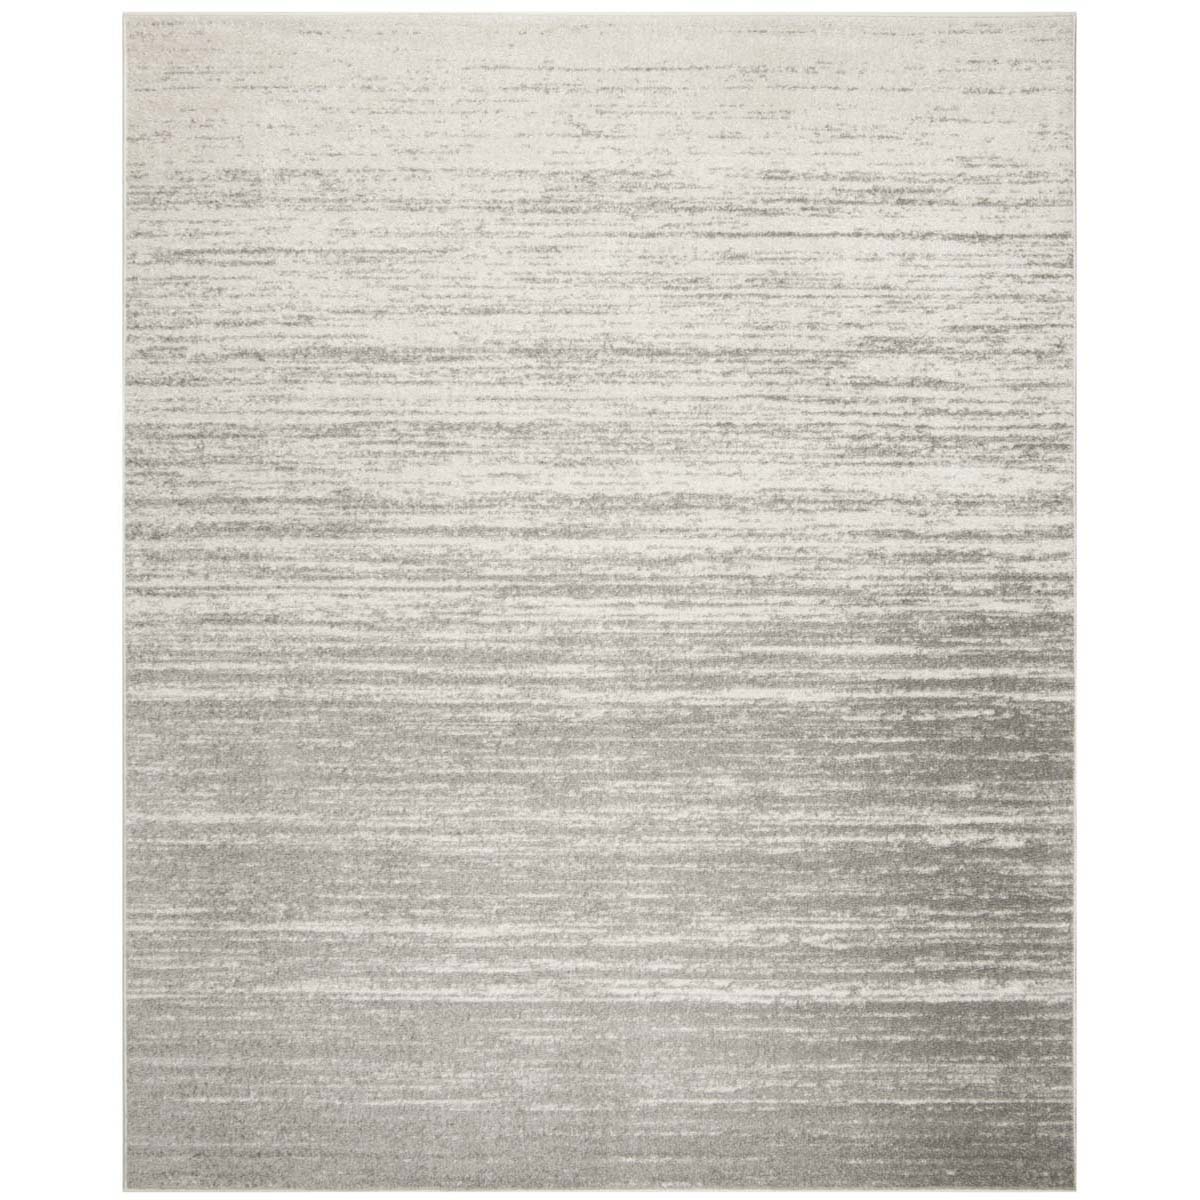 Safavieh Adirondack 113 Rug, Grey, ADR113 - Light Grey / Grey